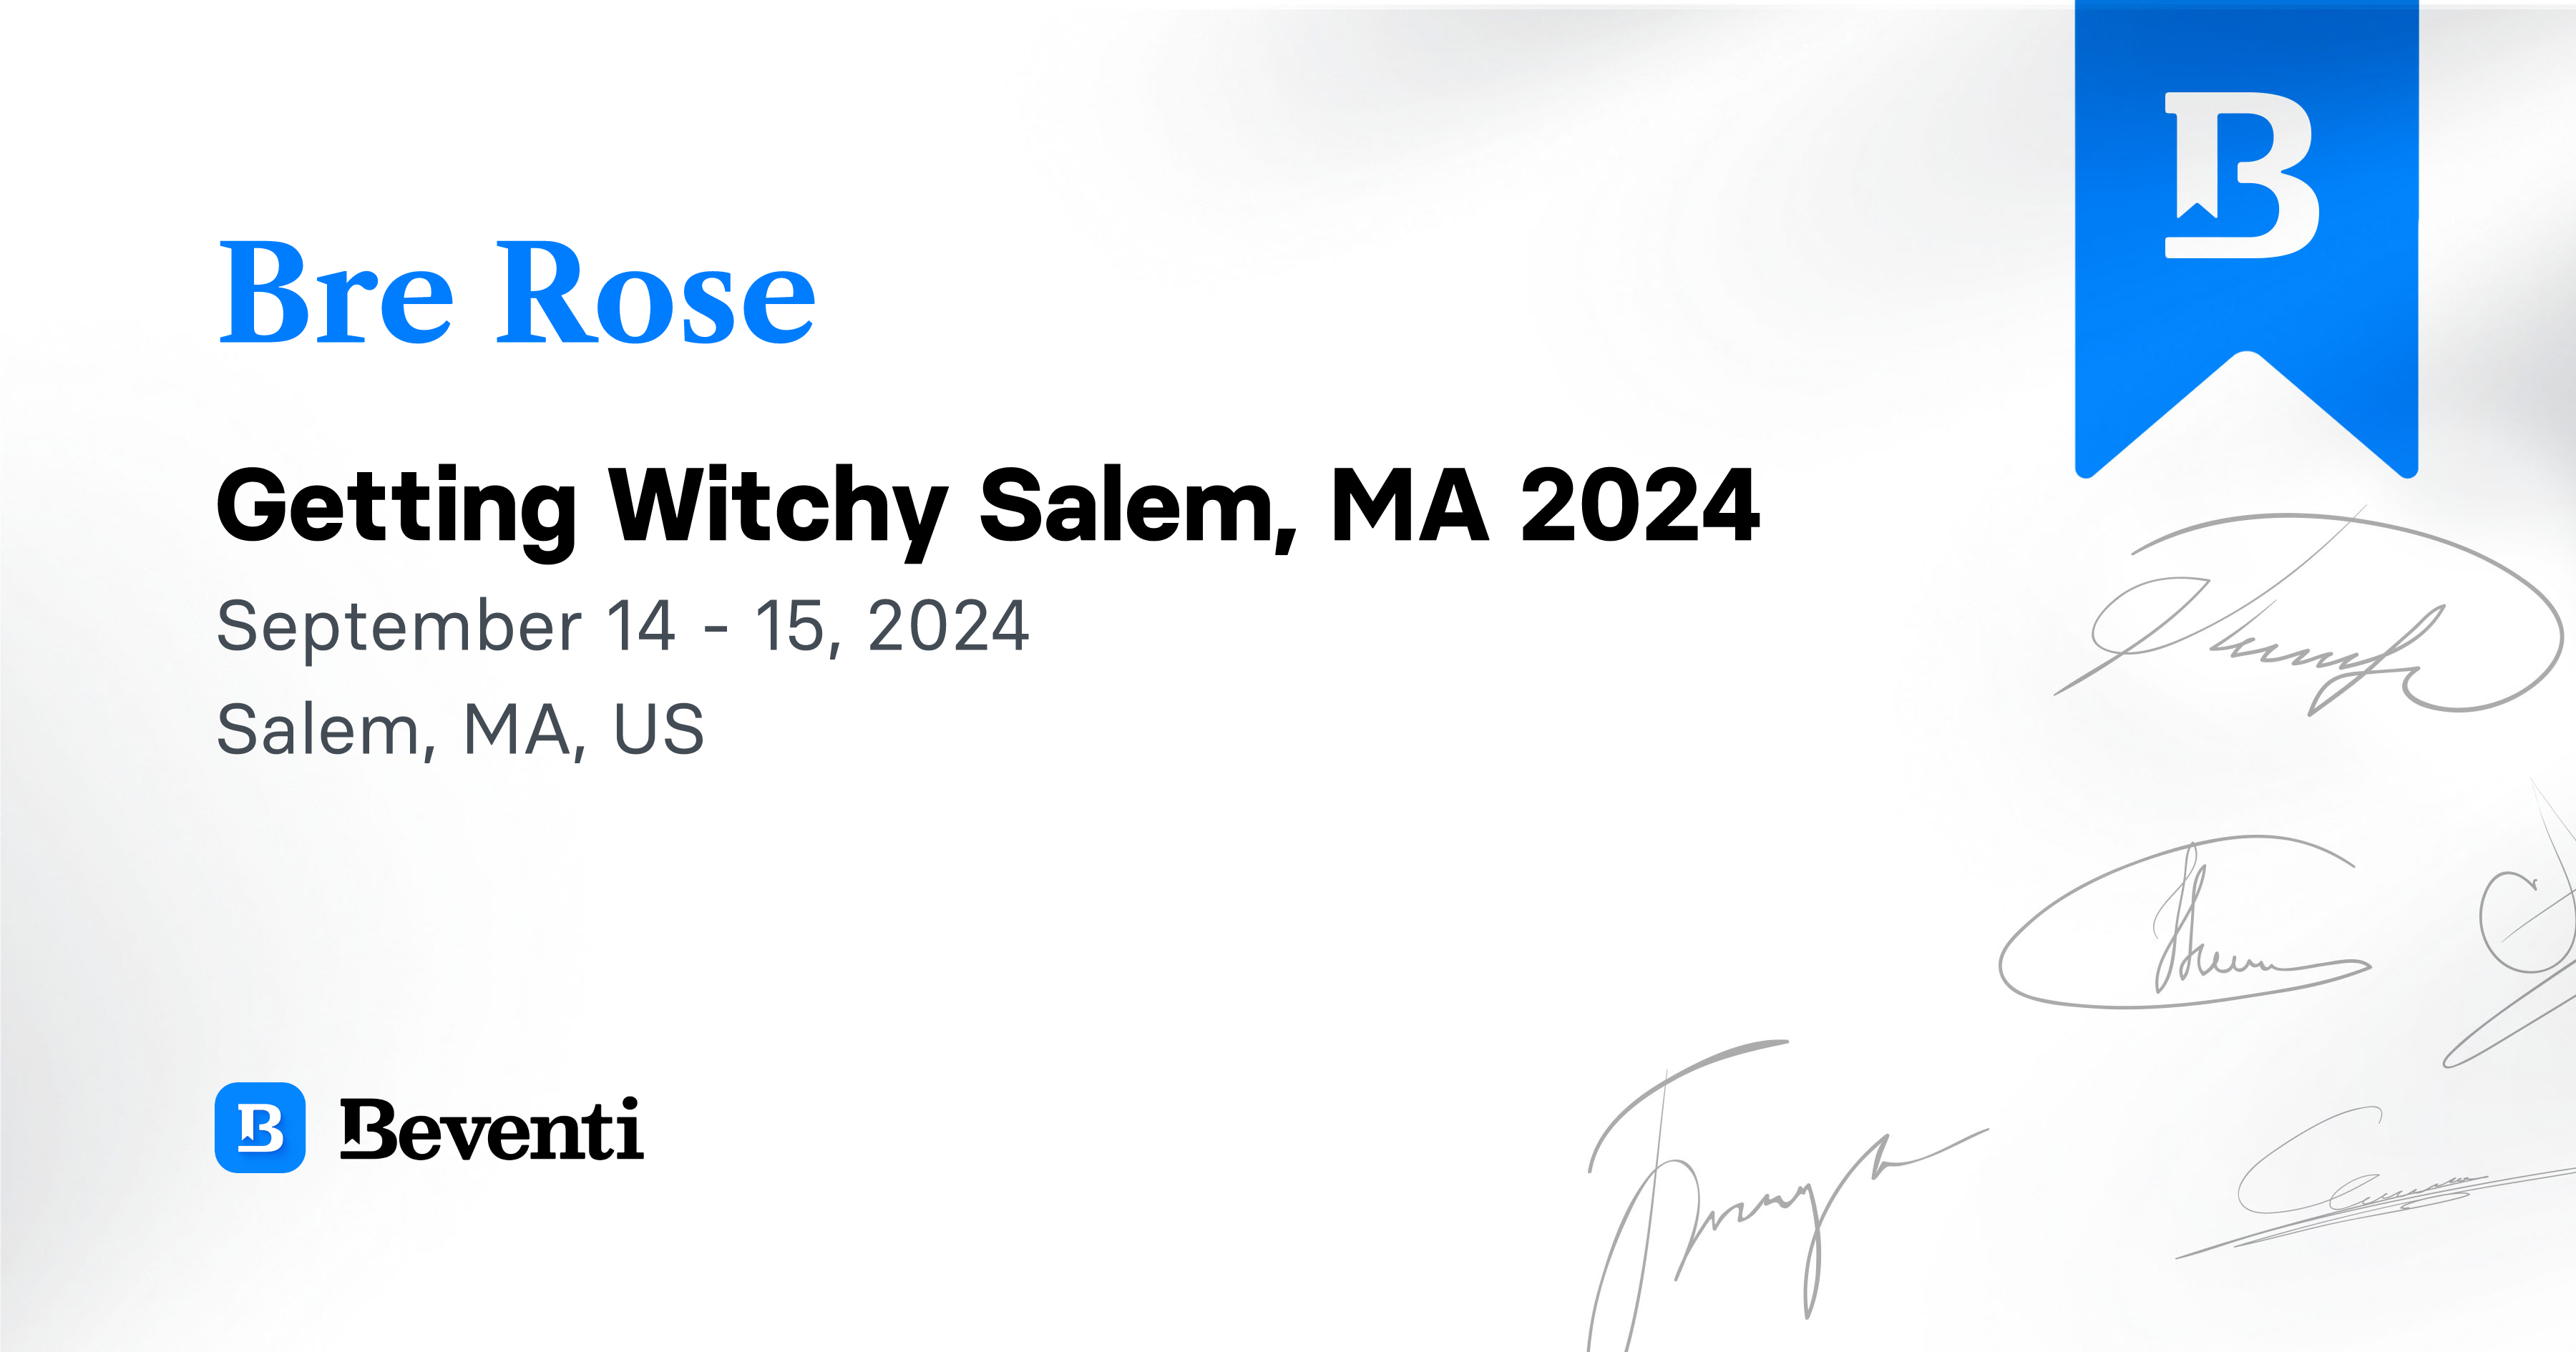 Bre Rose, Getting Witchy Salem, MA 2024 Beventi